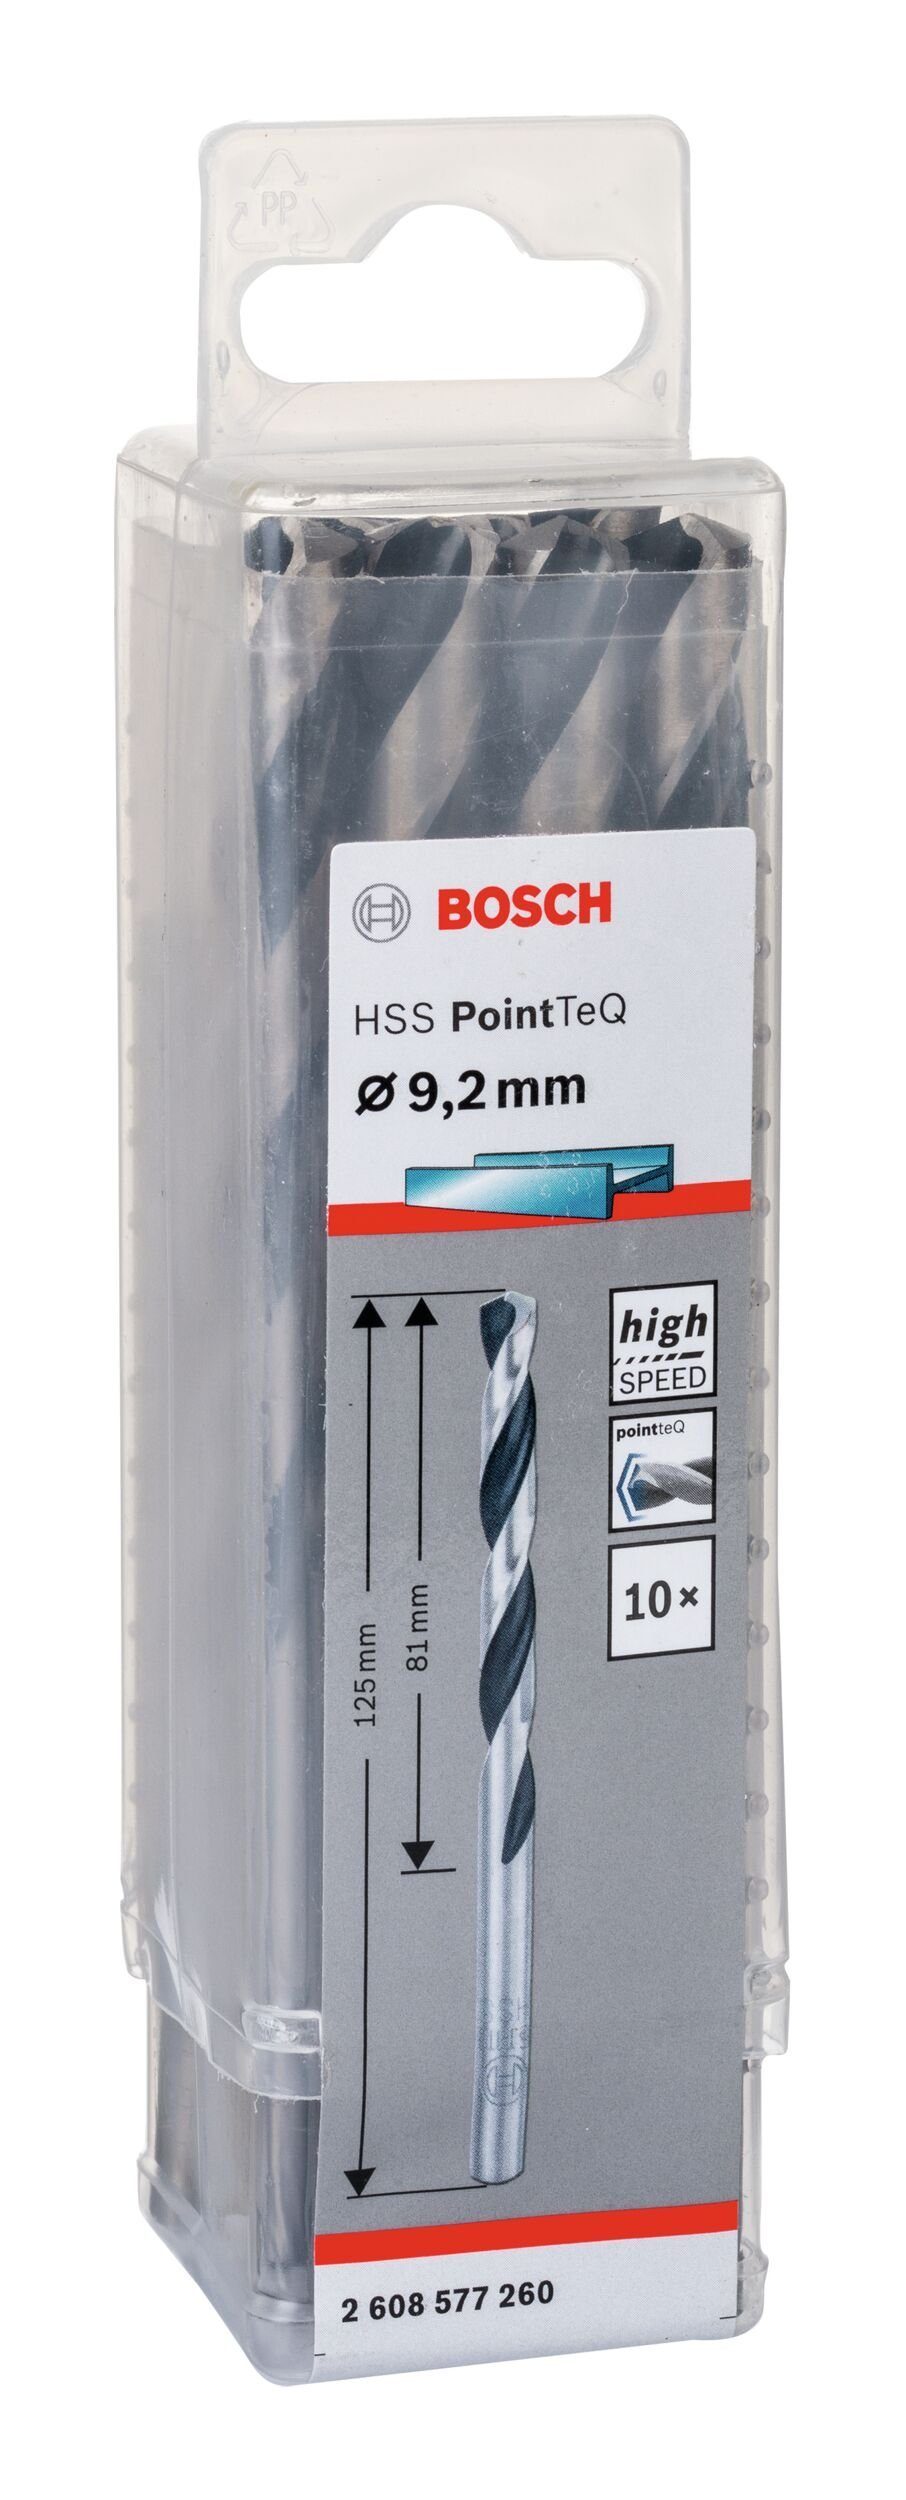 mm - (10 BOSCH Stück), PointTeQ Metallbohrer, Metallspiralbohrer HSS 338) (DIN 9,2 - 10er-Pack